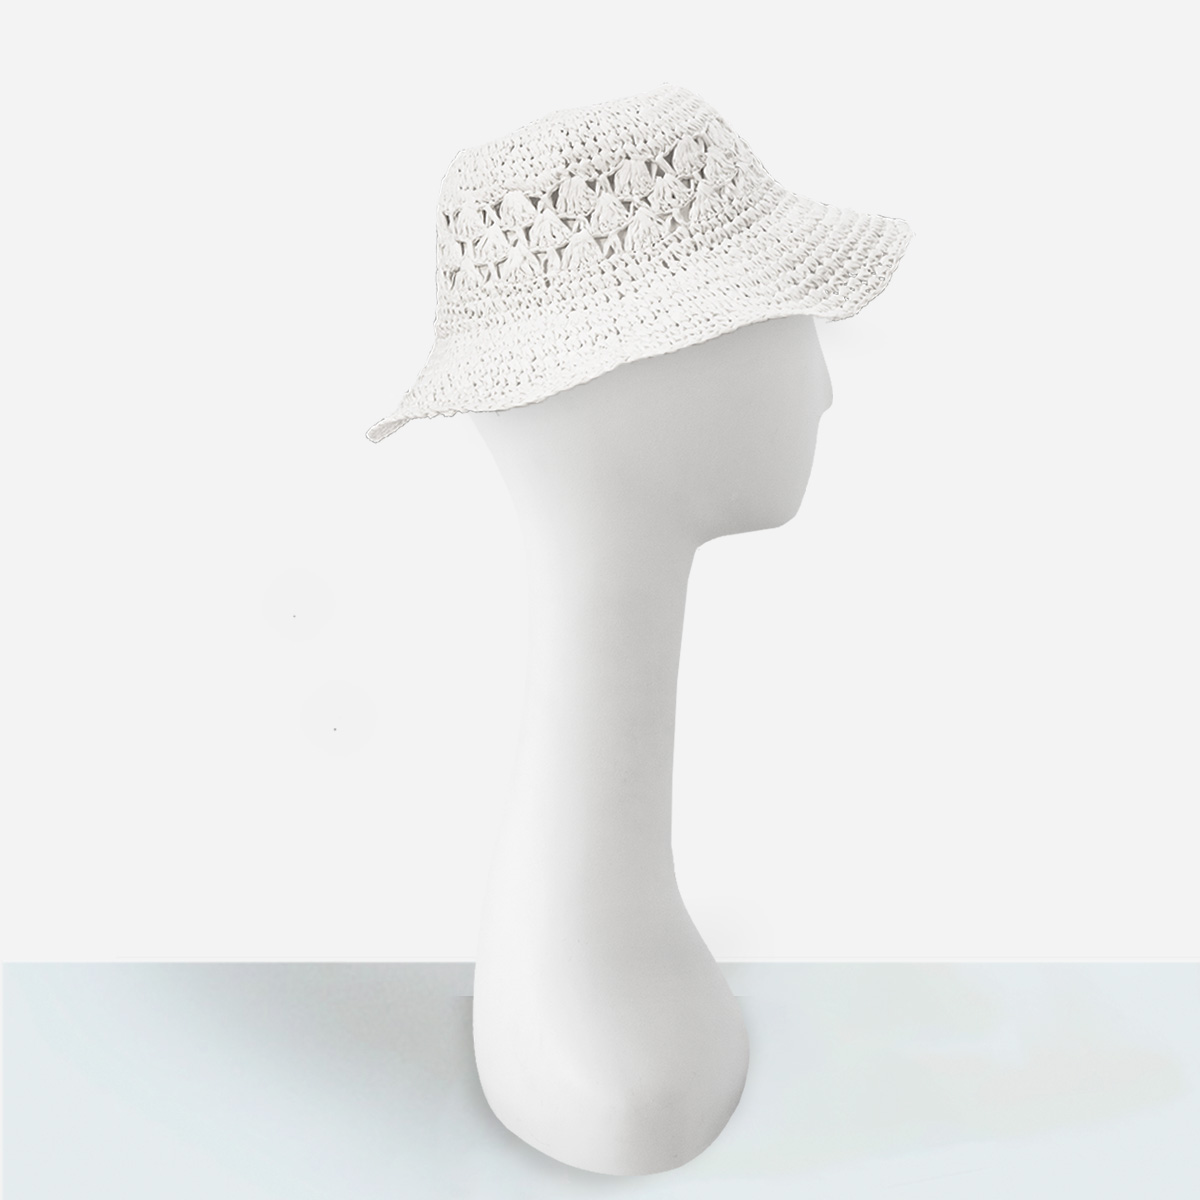 womens vintage sun hat